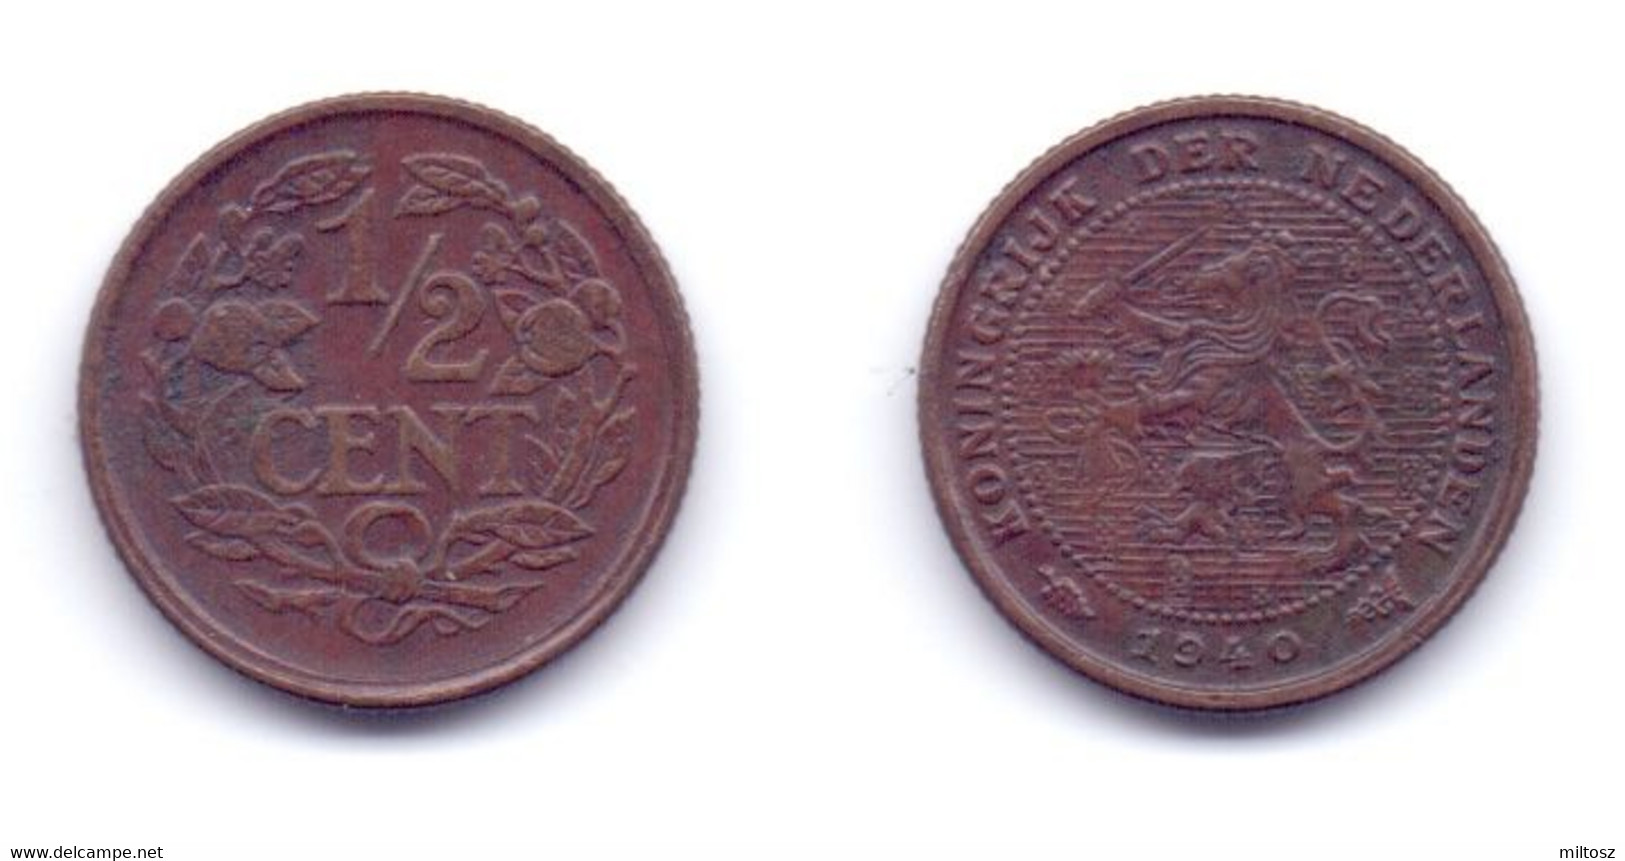 Netherlands 1/2 Cent 1940 - 0.5 Cent